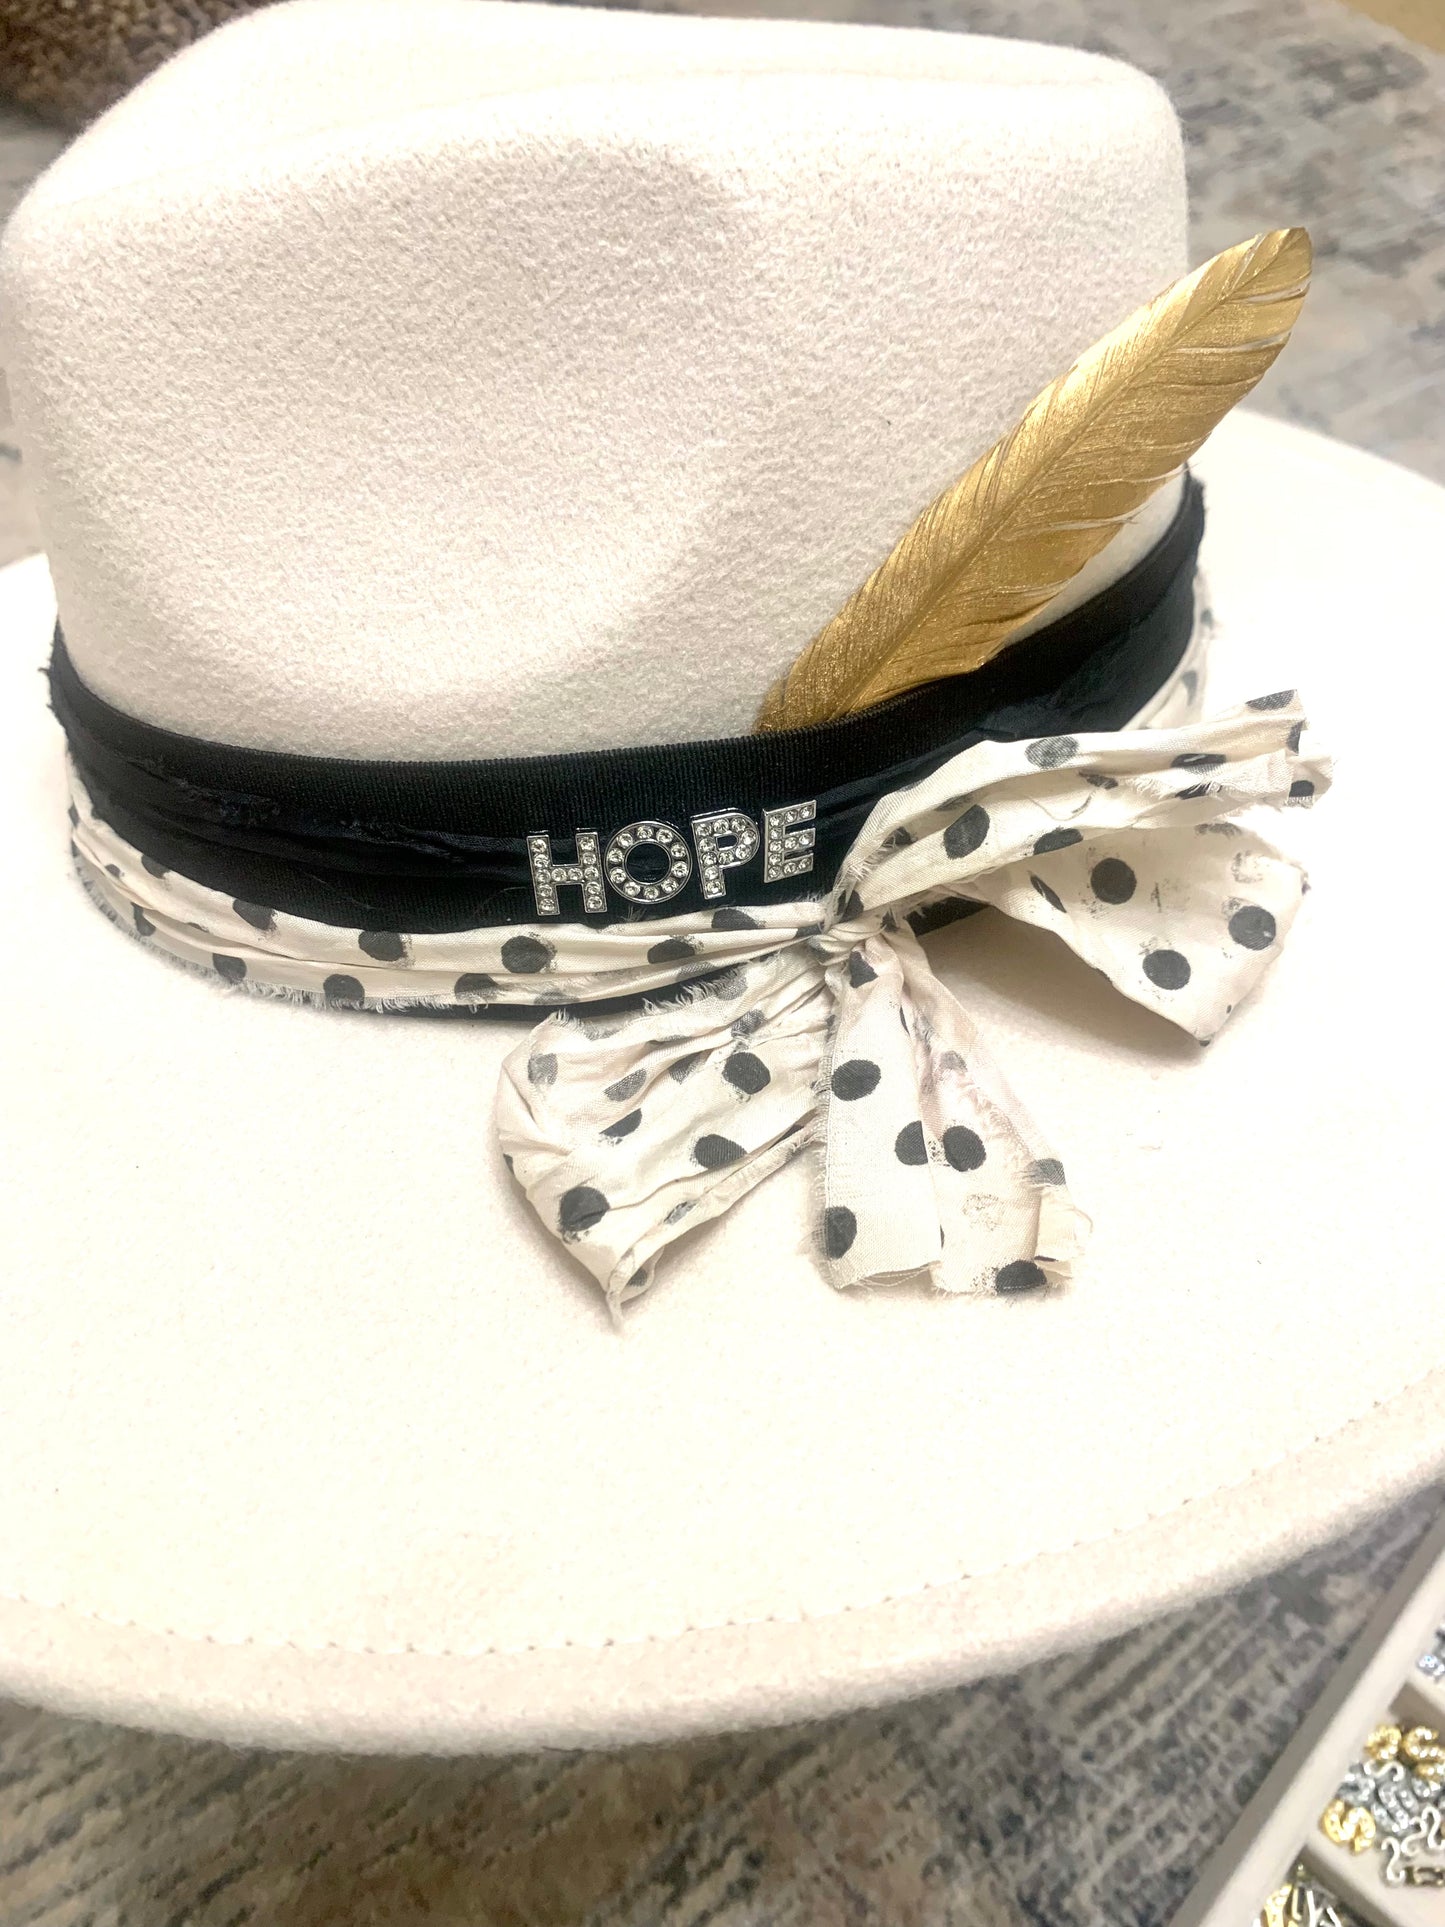 Hats for HOPE Winter White Rancher in Polka Dot